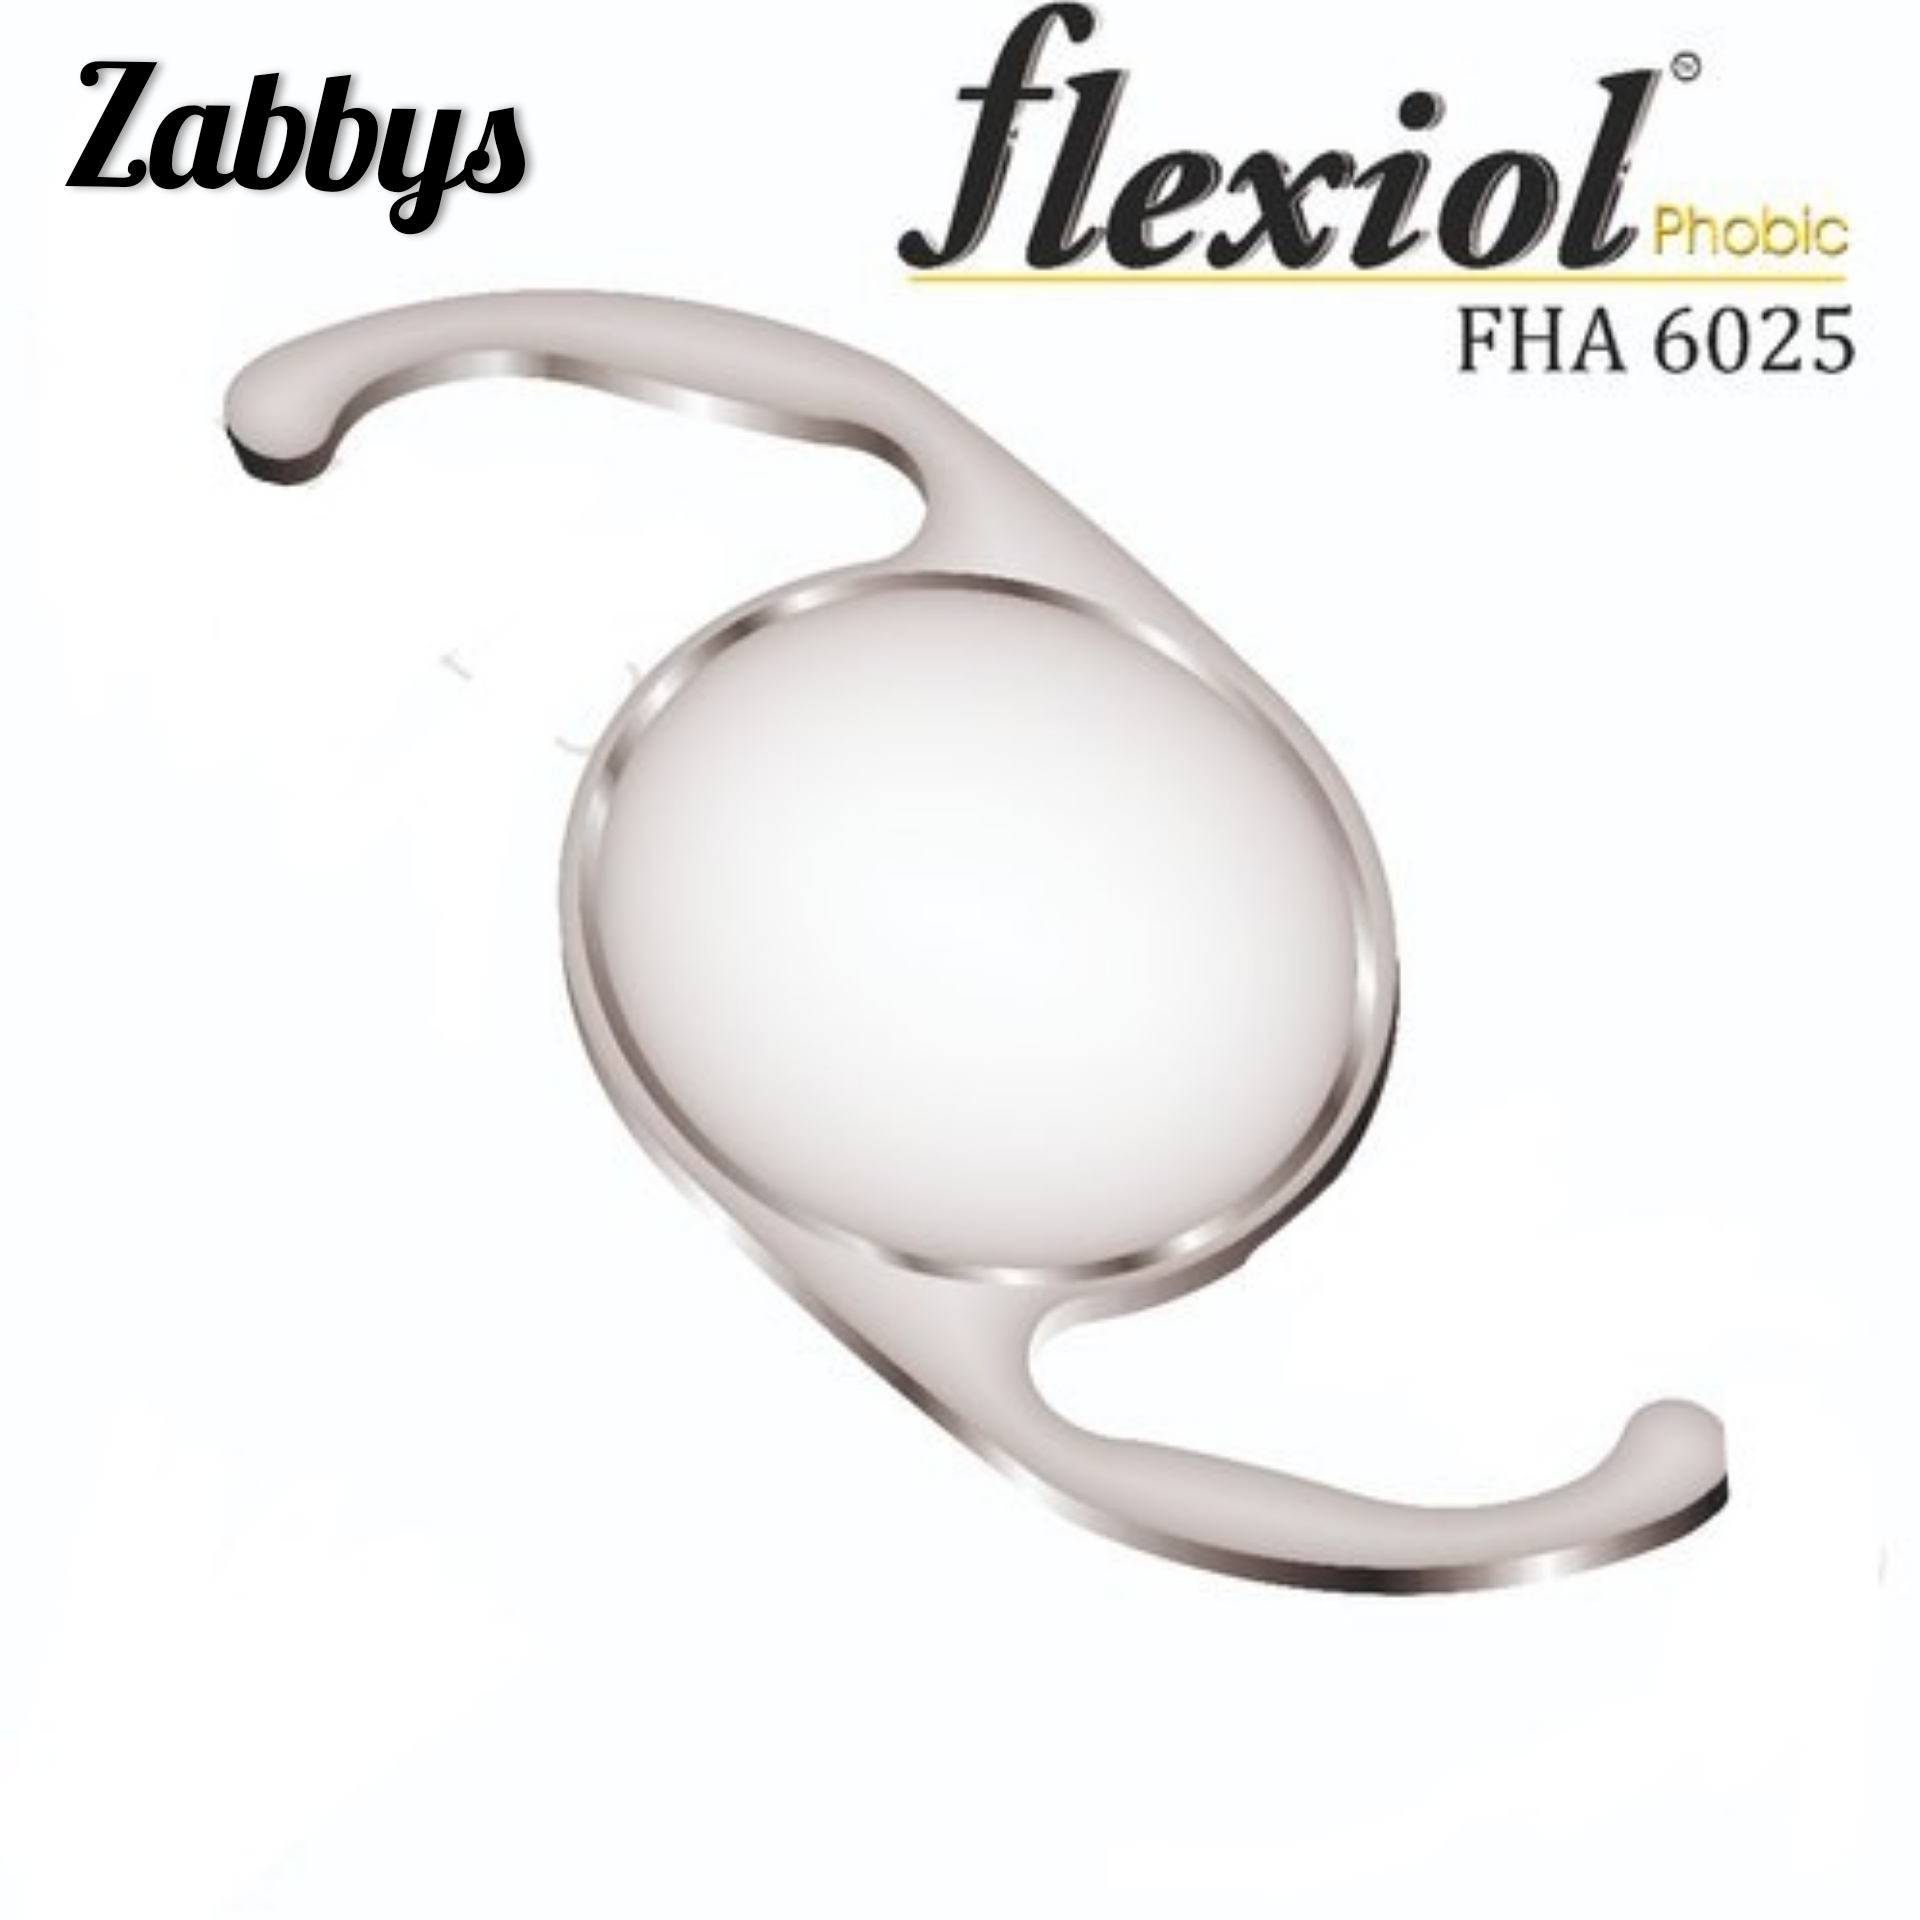 Zabbys Flexiol